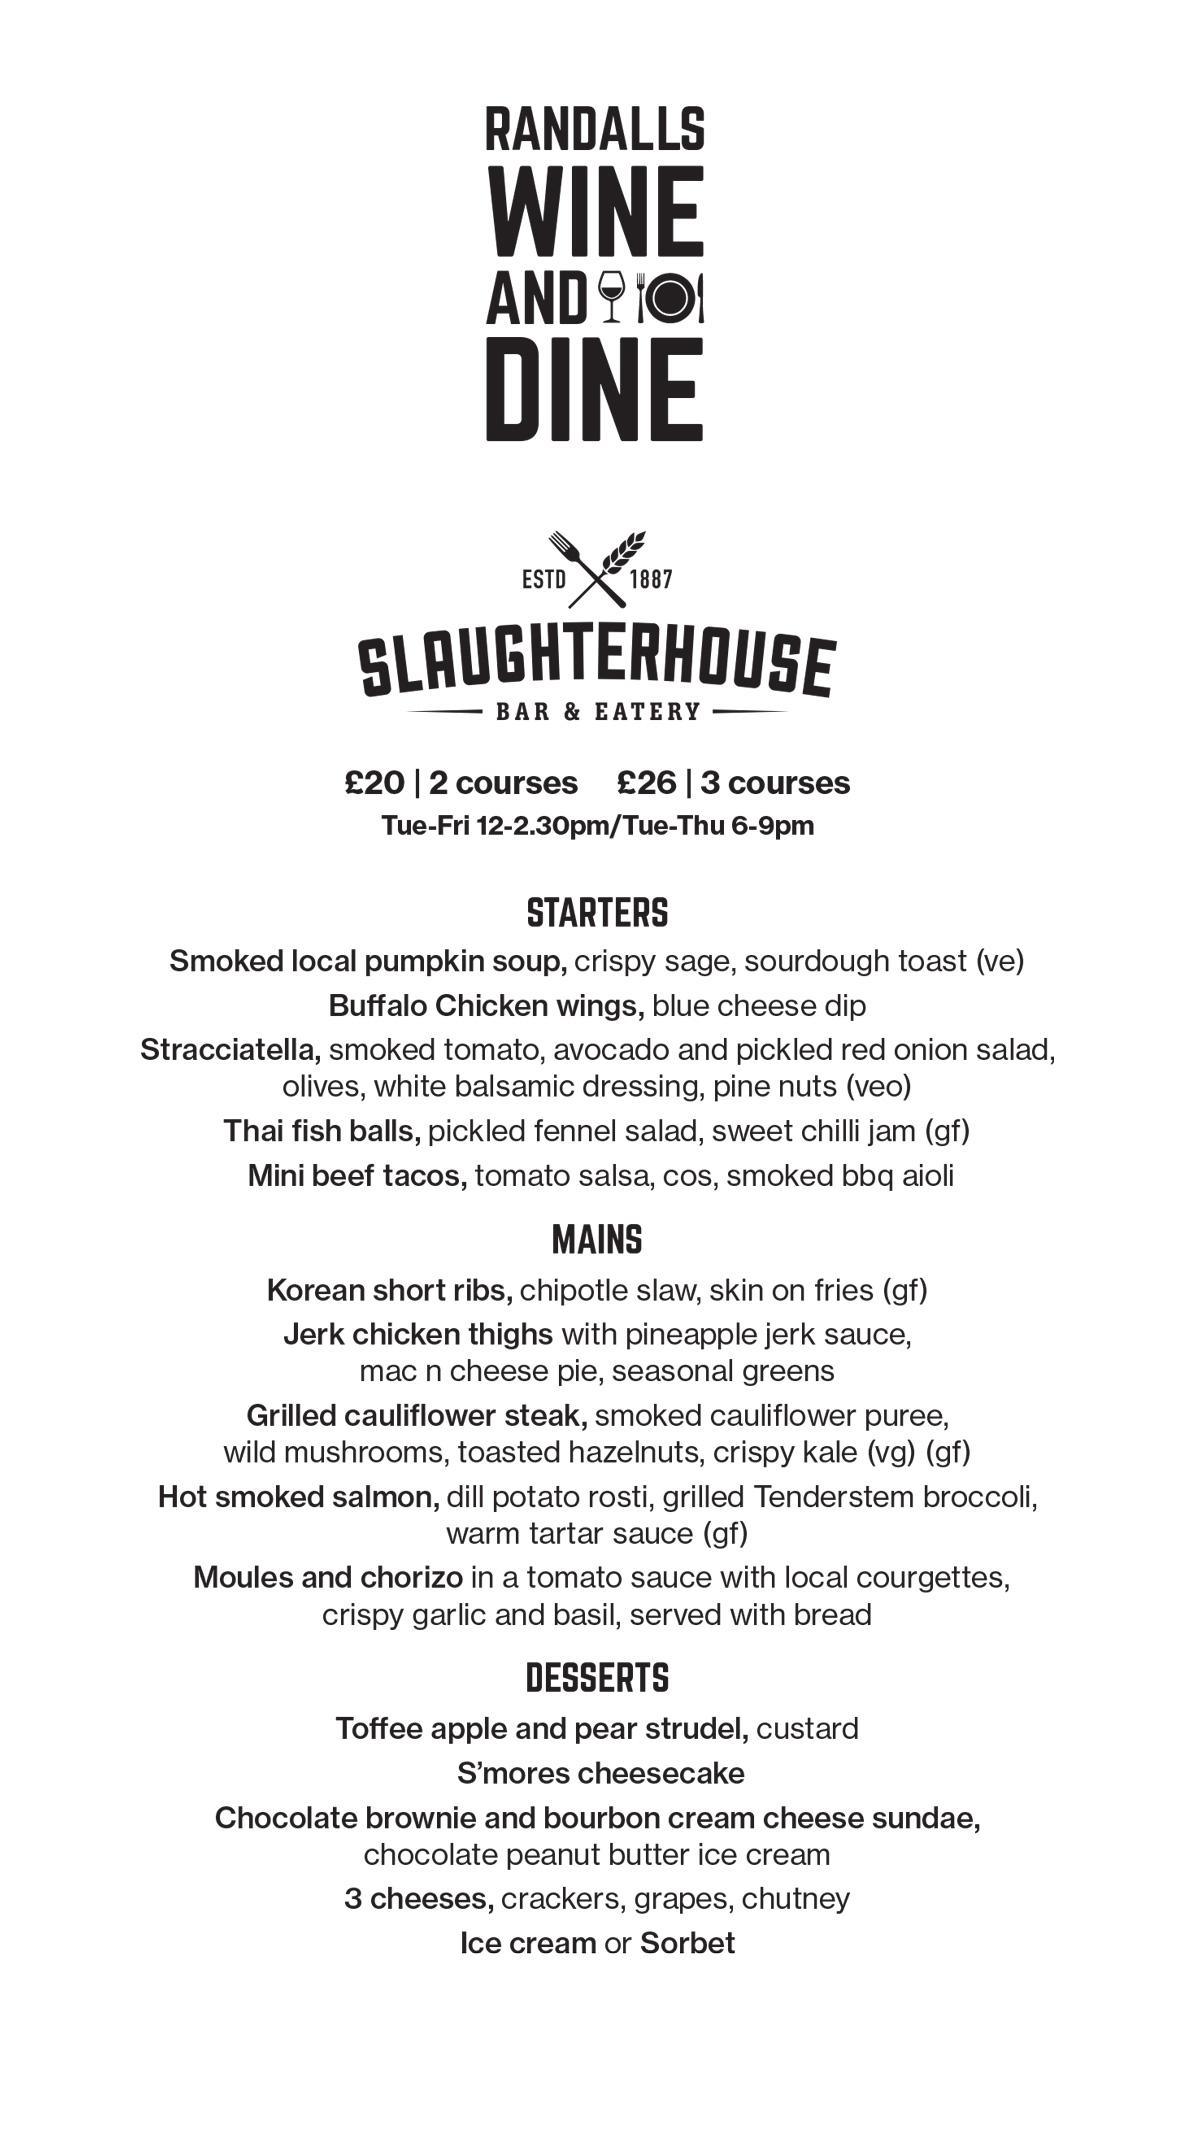 Slaughterhouse Wine & Dine Menu